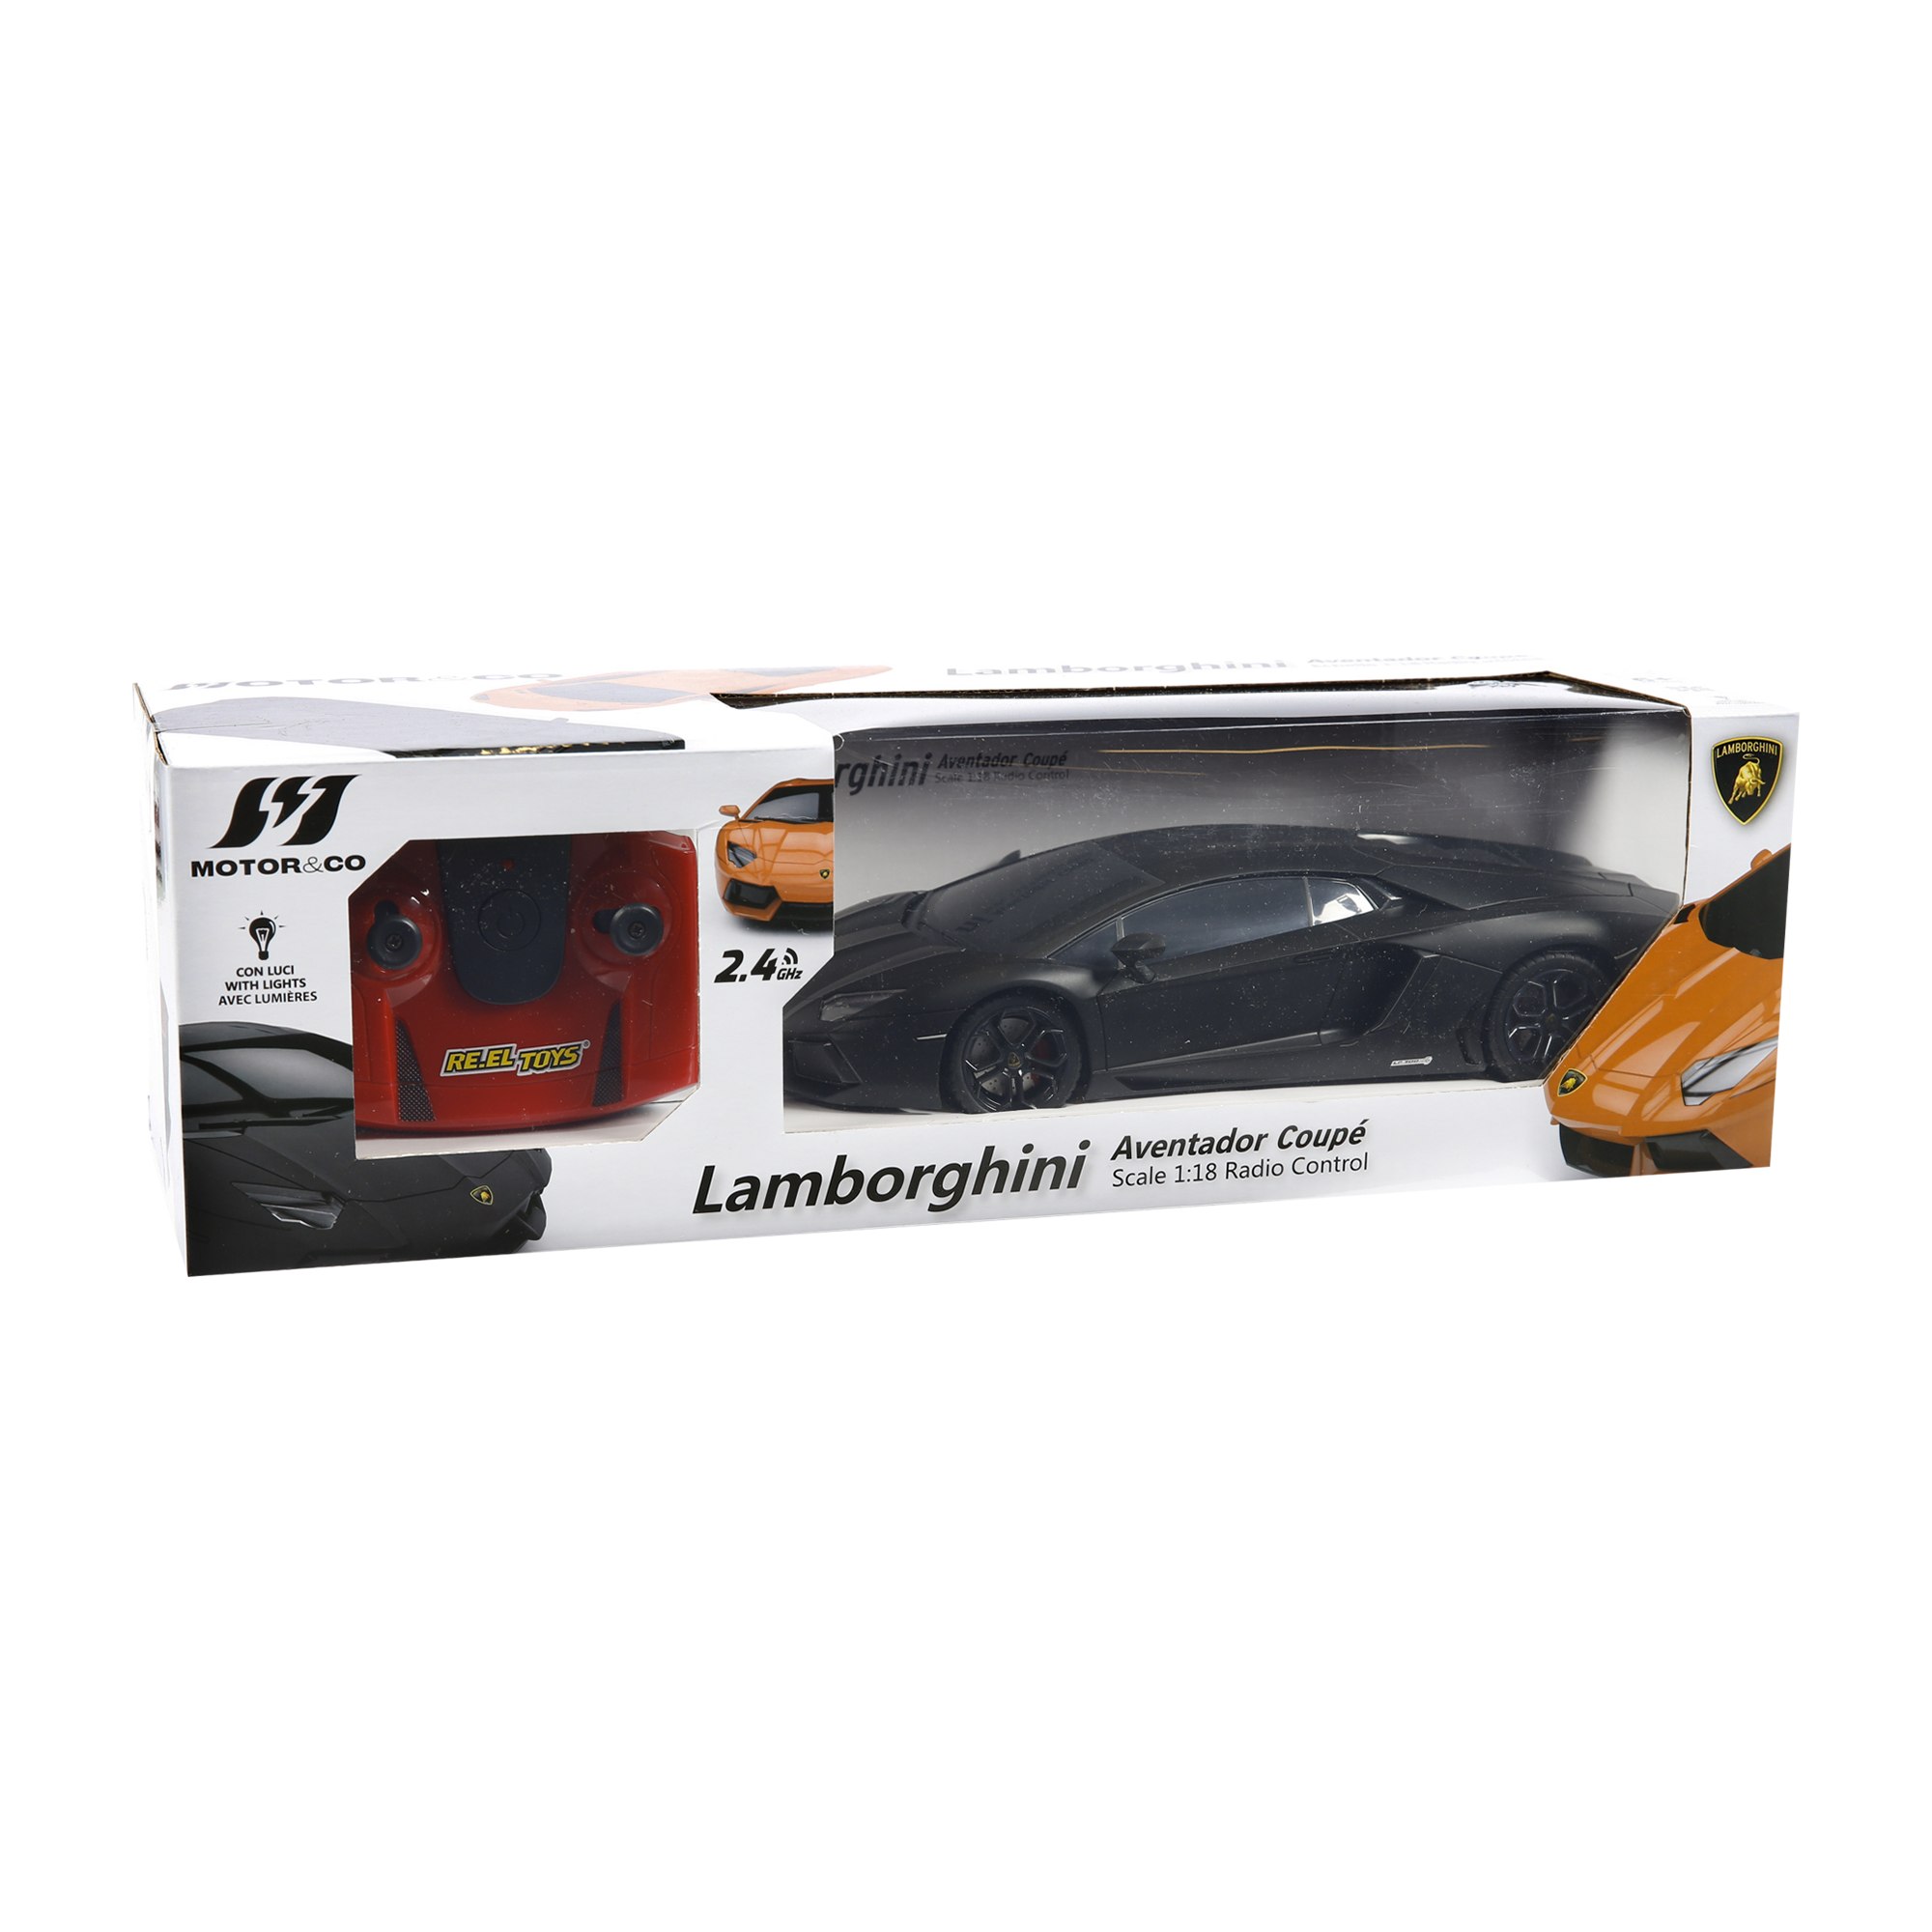 Lamborghini aventador - MOTOR & CO.